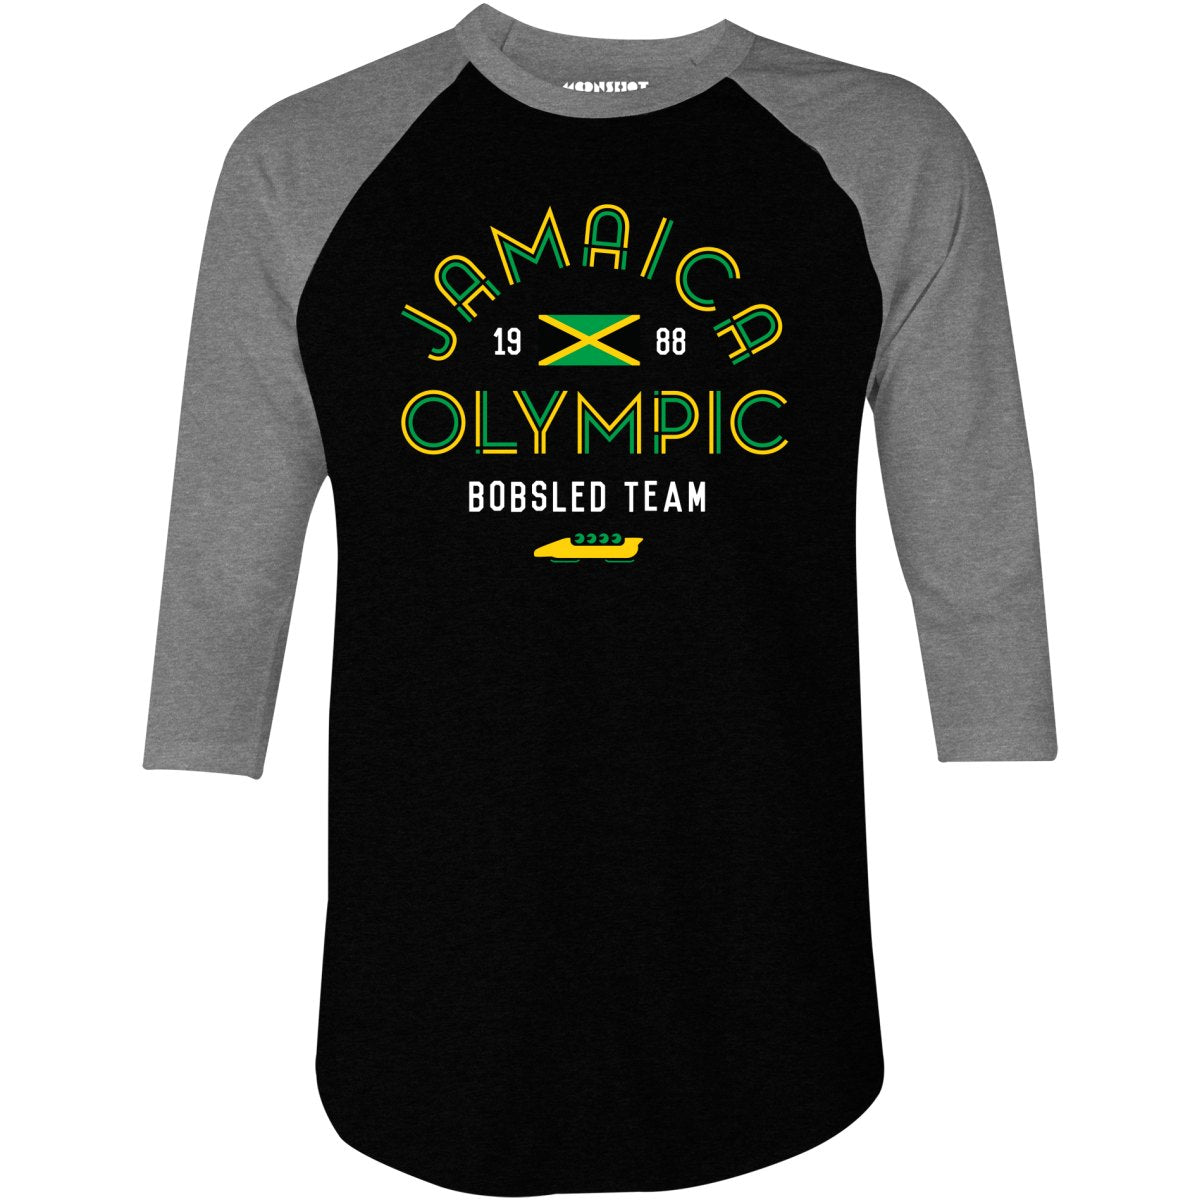 1988 Jamaica Olympic Bobsled Team - 3/4 Sleeve Raglan T-Shirt